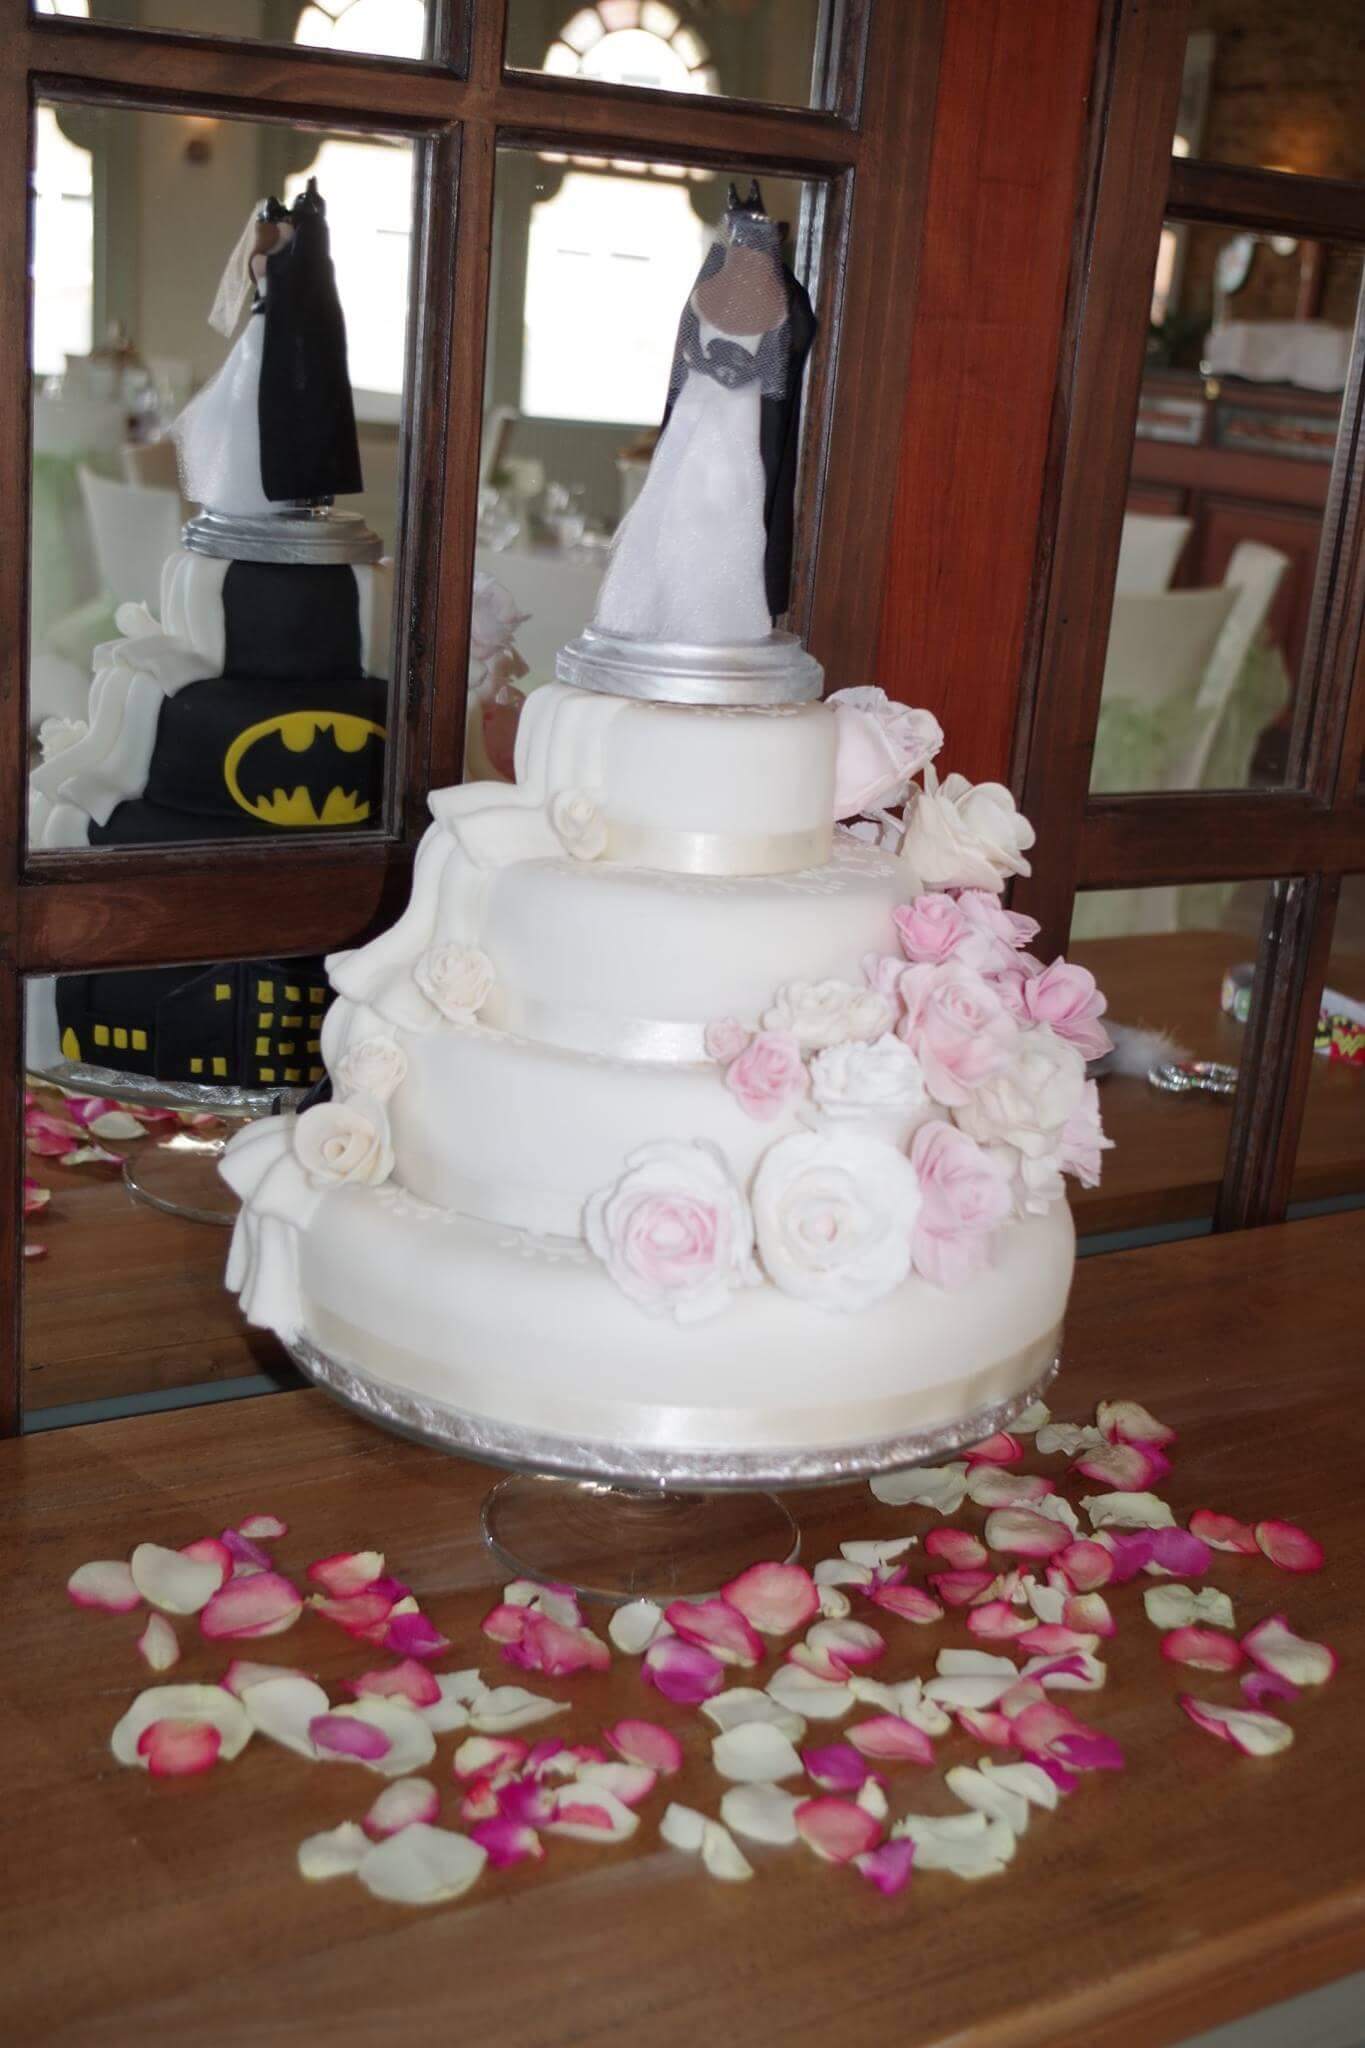 Acrylic Wedding Cake Topper Inspired by Batman couple | eBay